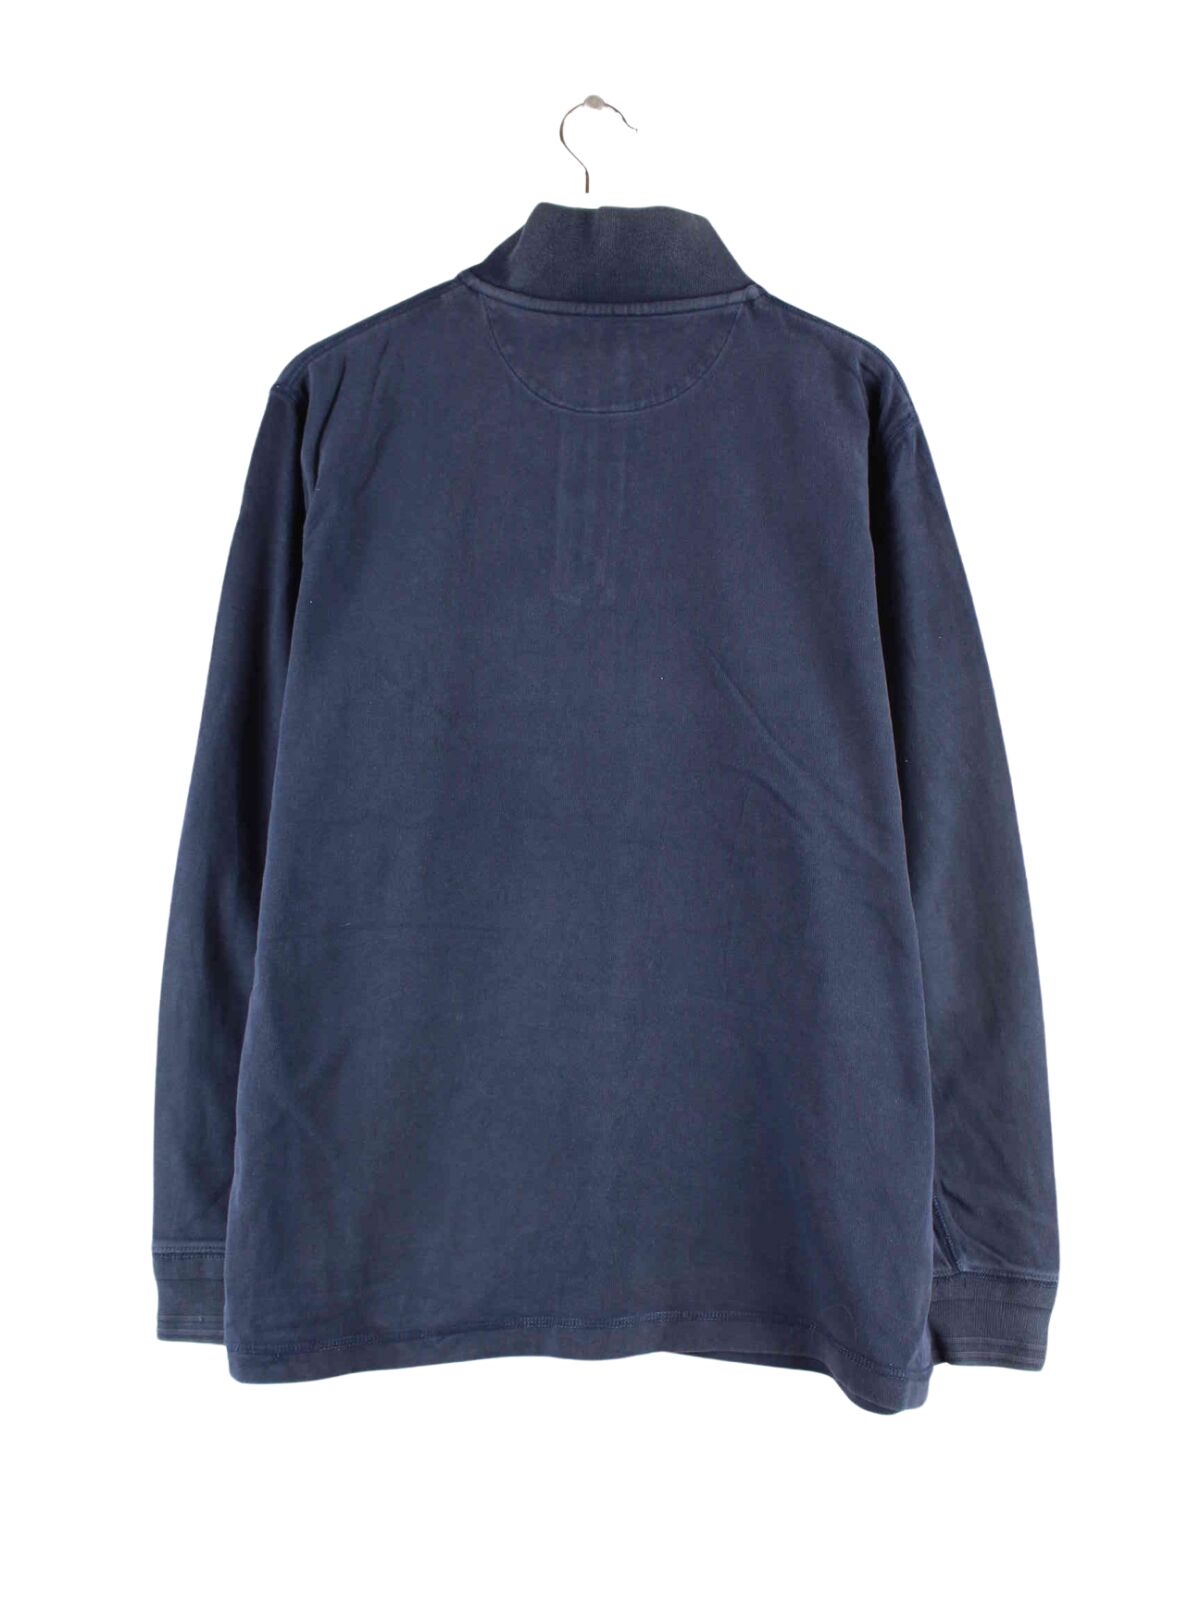 Timberland Basic Half Zip Sweater Blau L (back image)